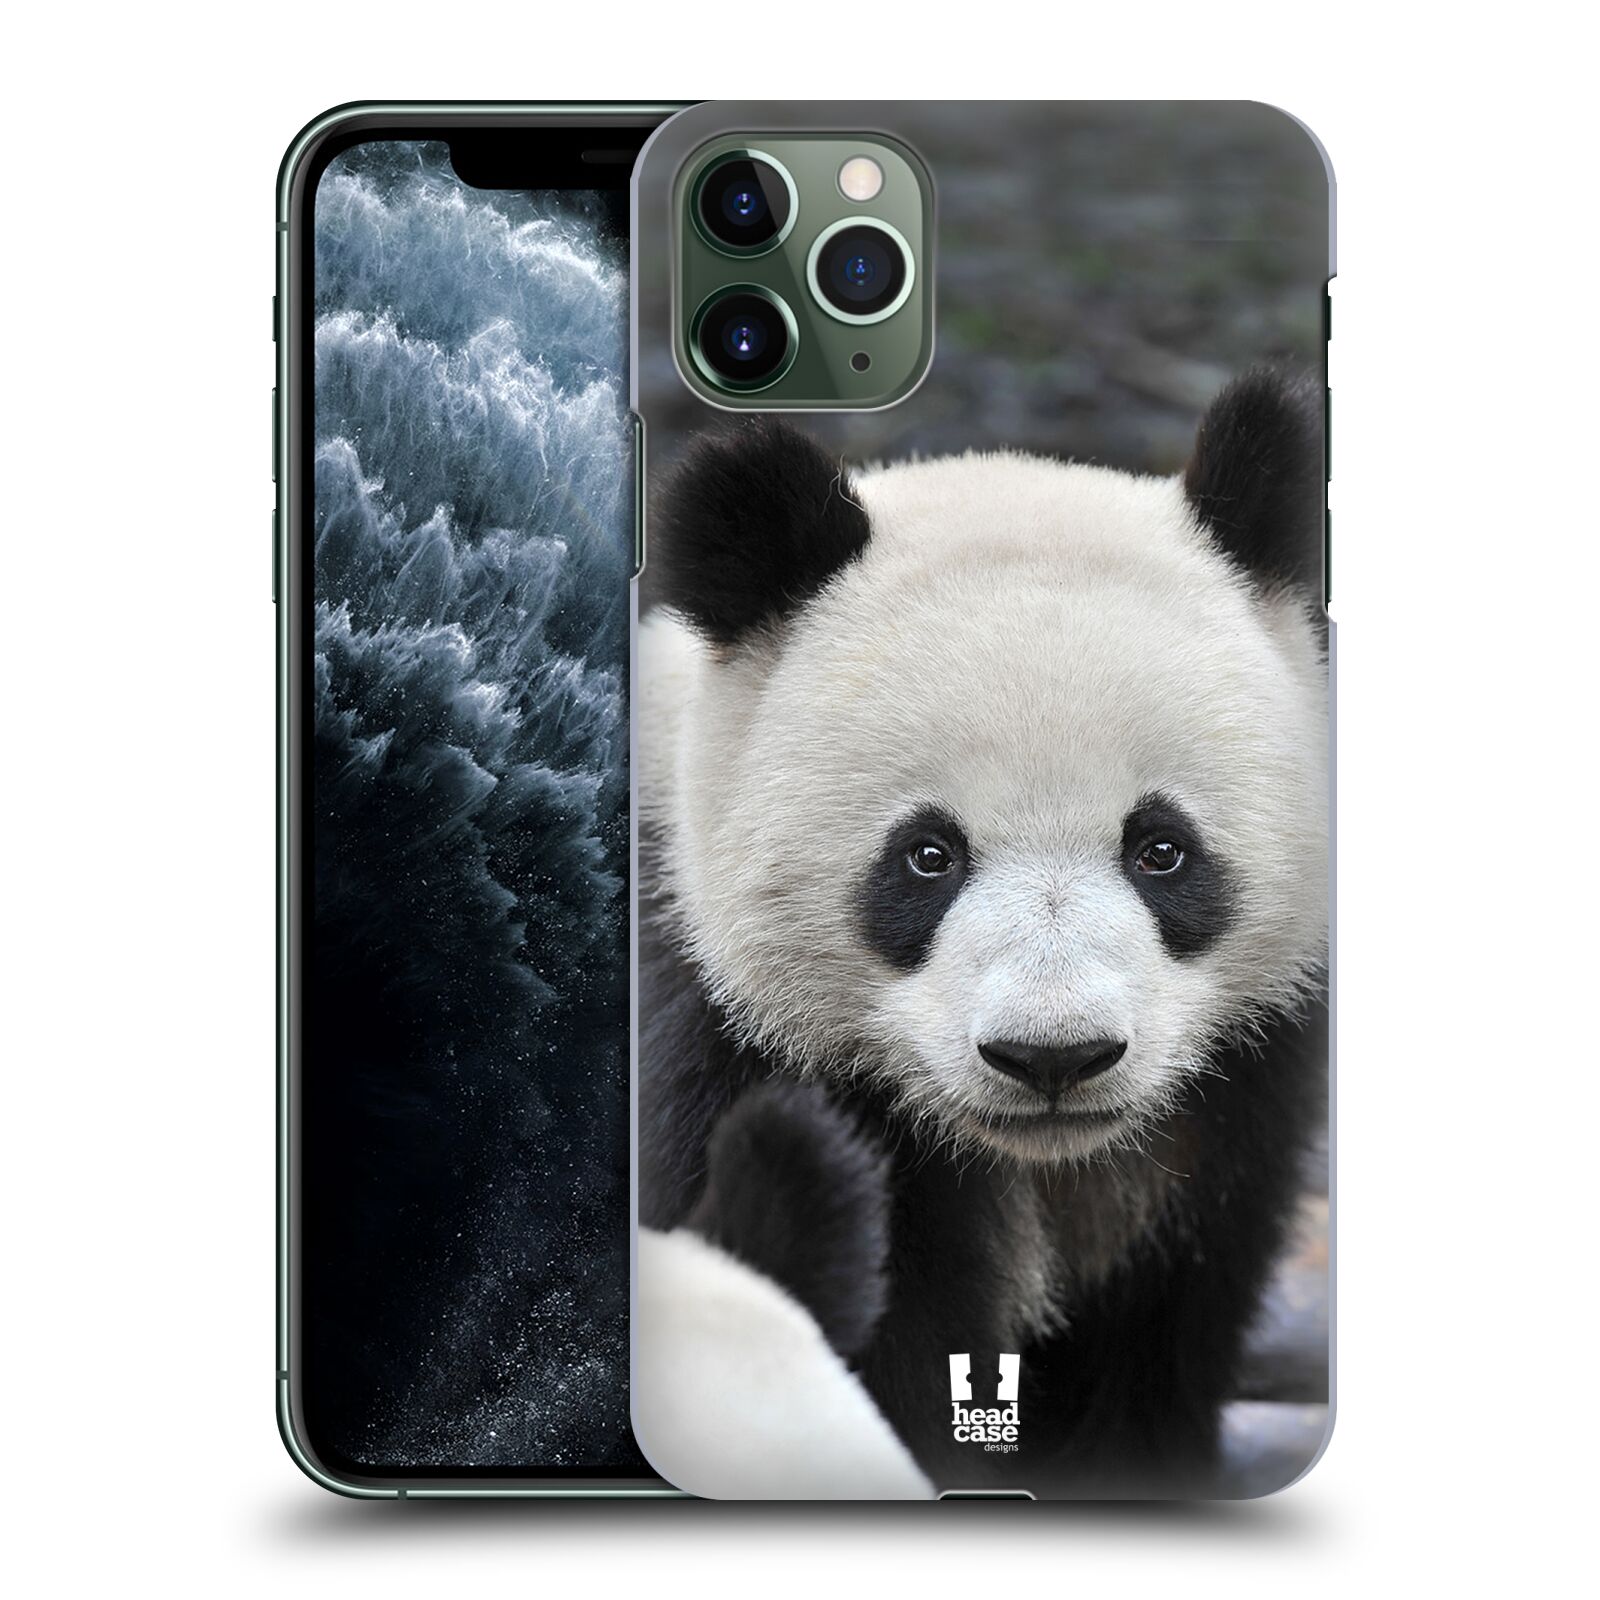 Pouzdro na mobil Apple Iphone 11 PRO MAX - HEAD CASE - vzor Divočina, Divoký život a zvířata foto MEDVĚD PANDA